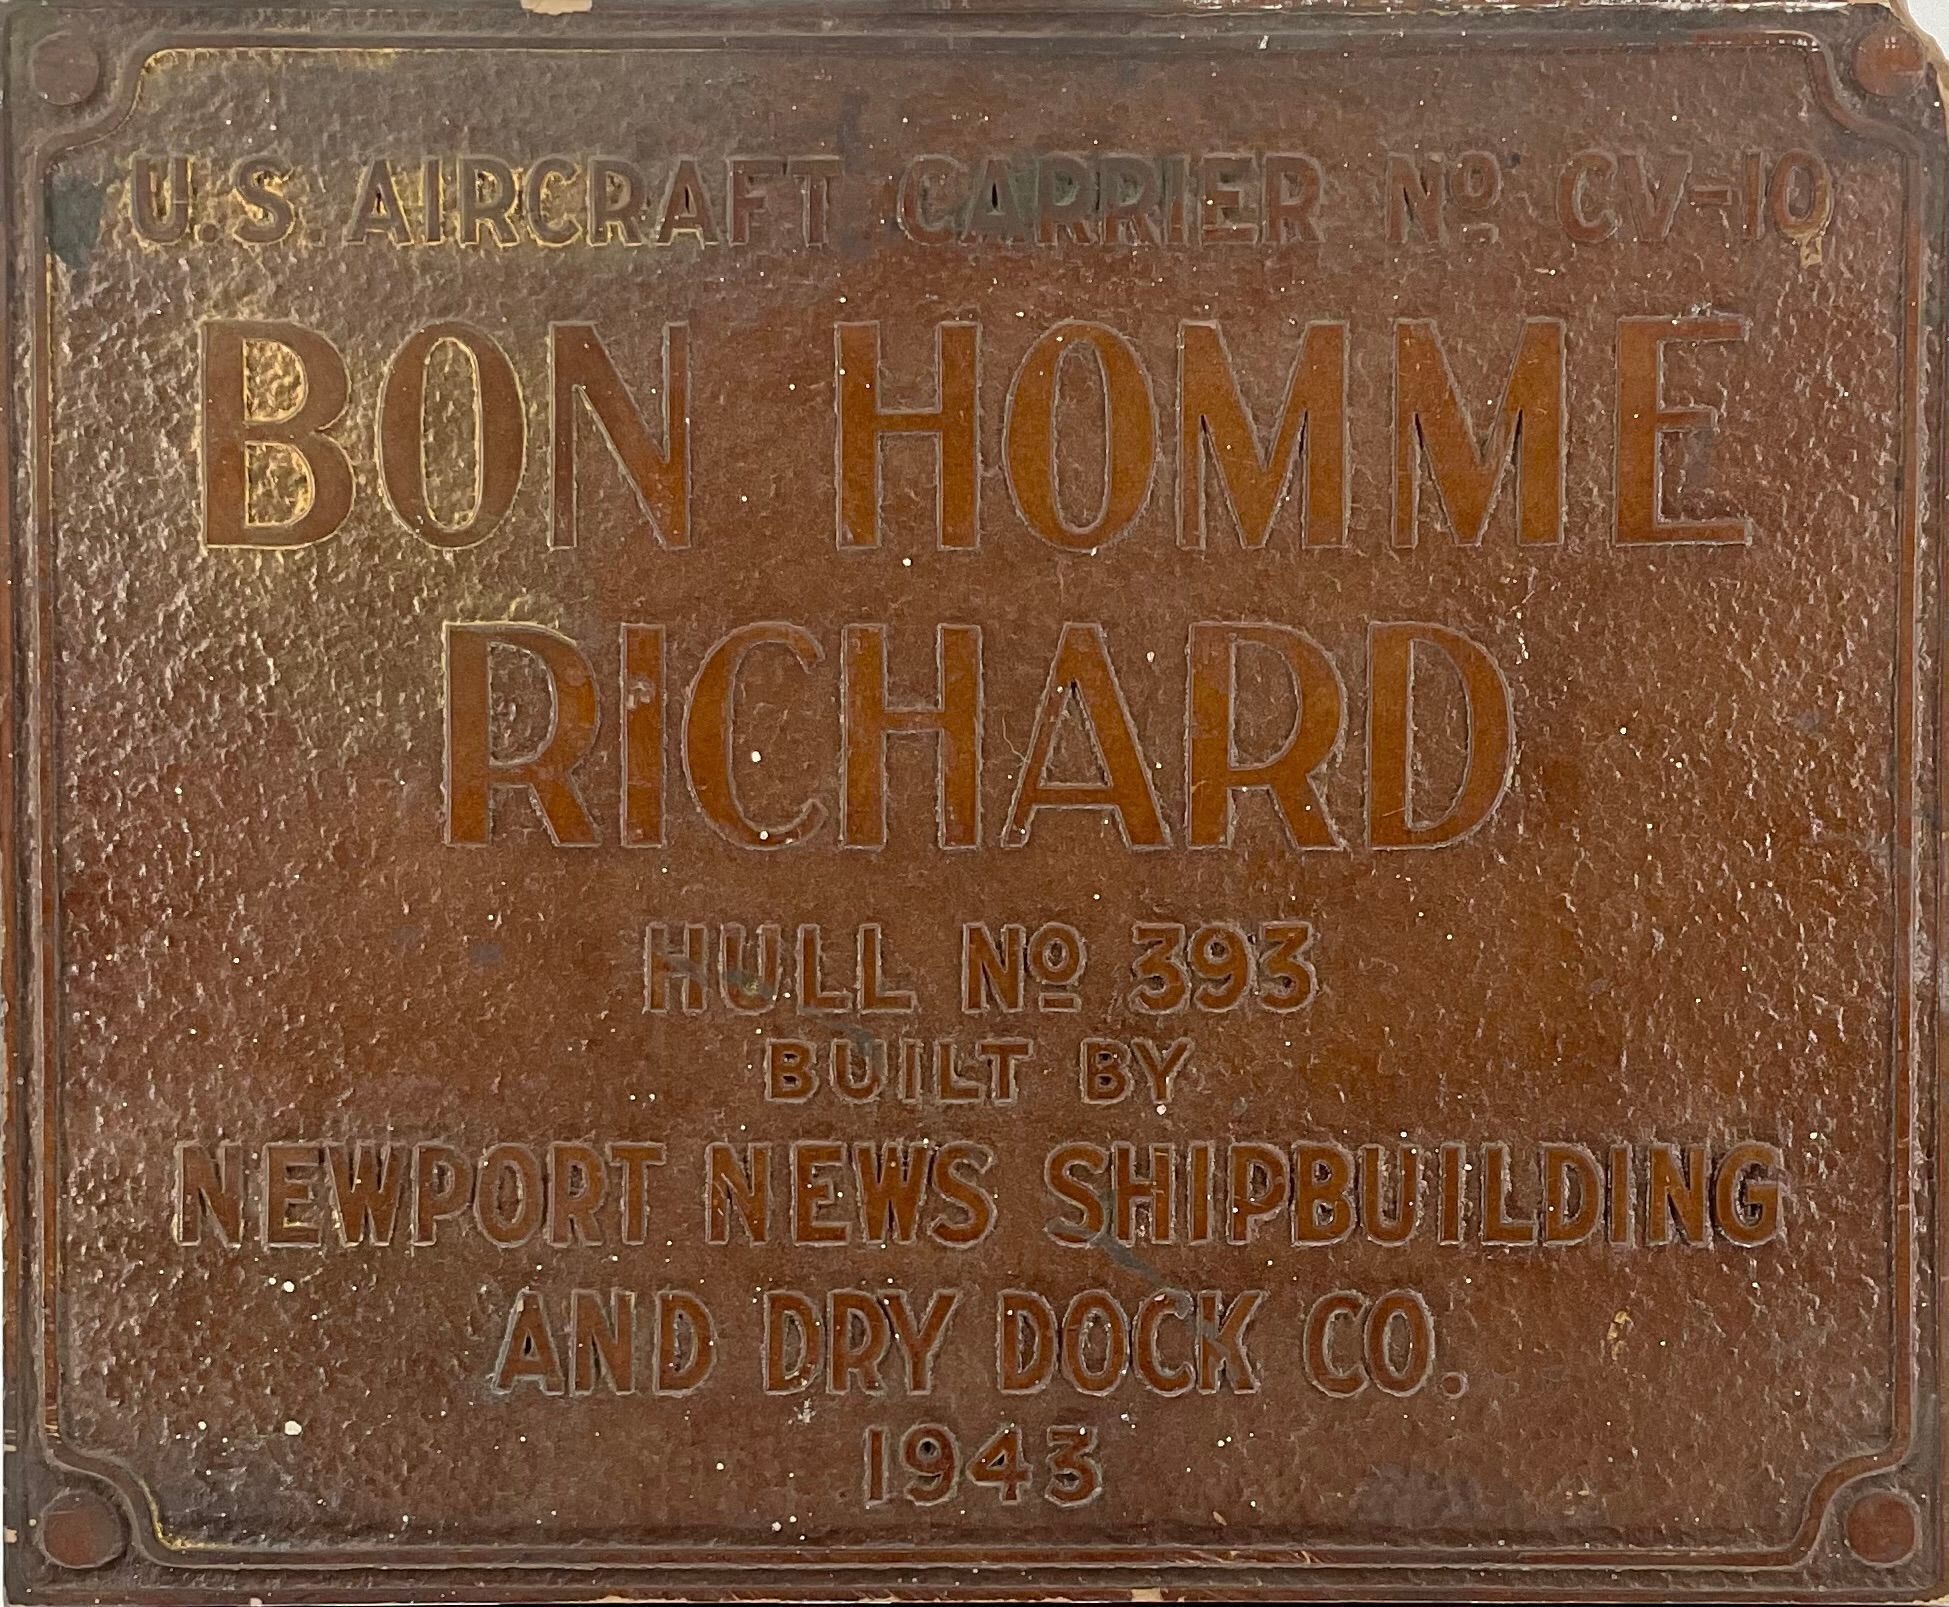 Primary Image of USS Bon Homme Richard (CV-10) Builder's Plate Pattern